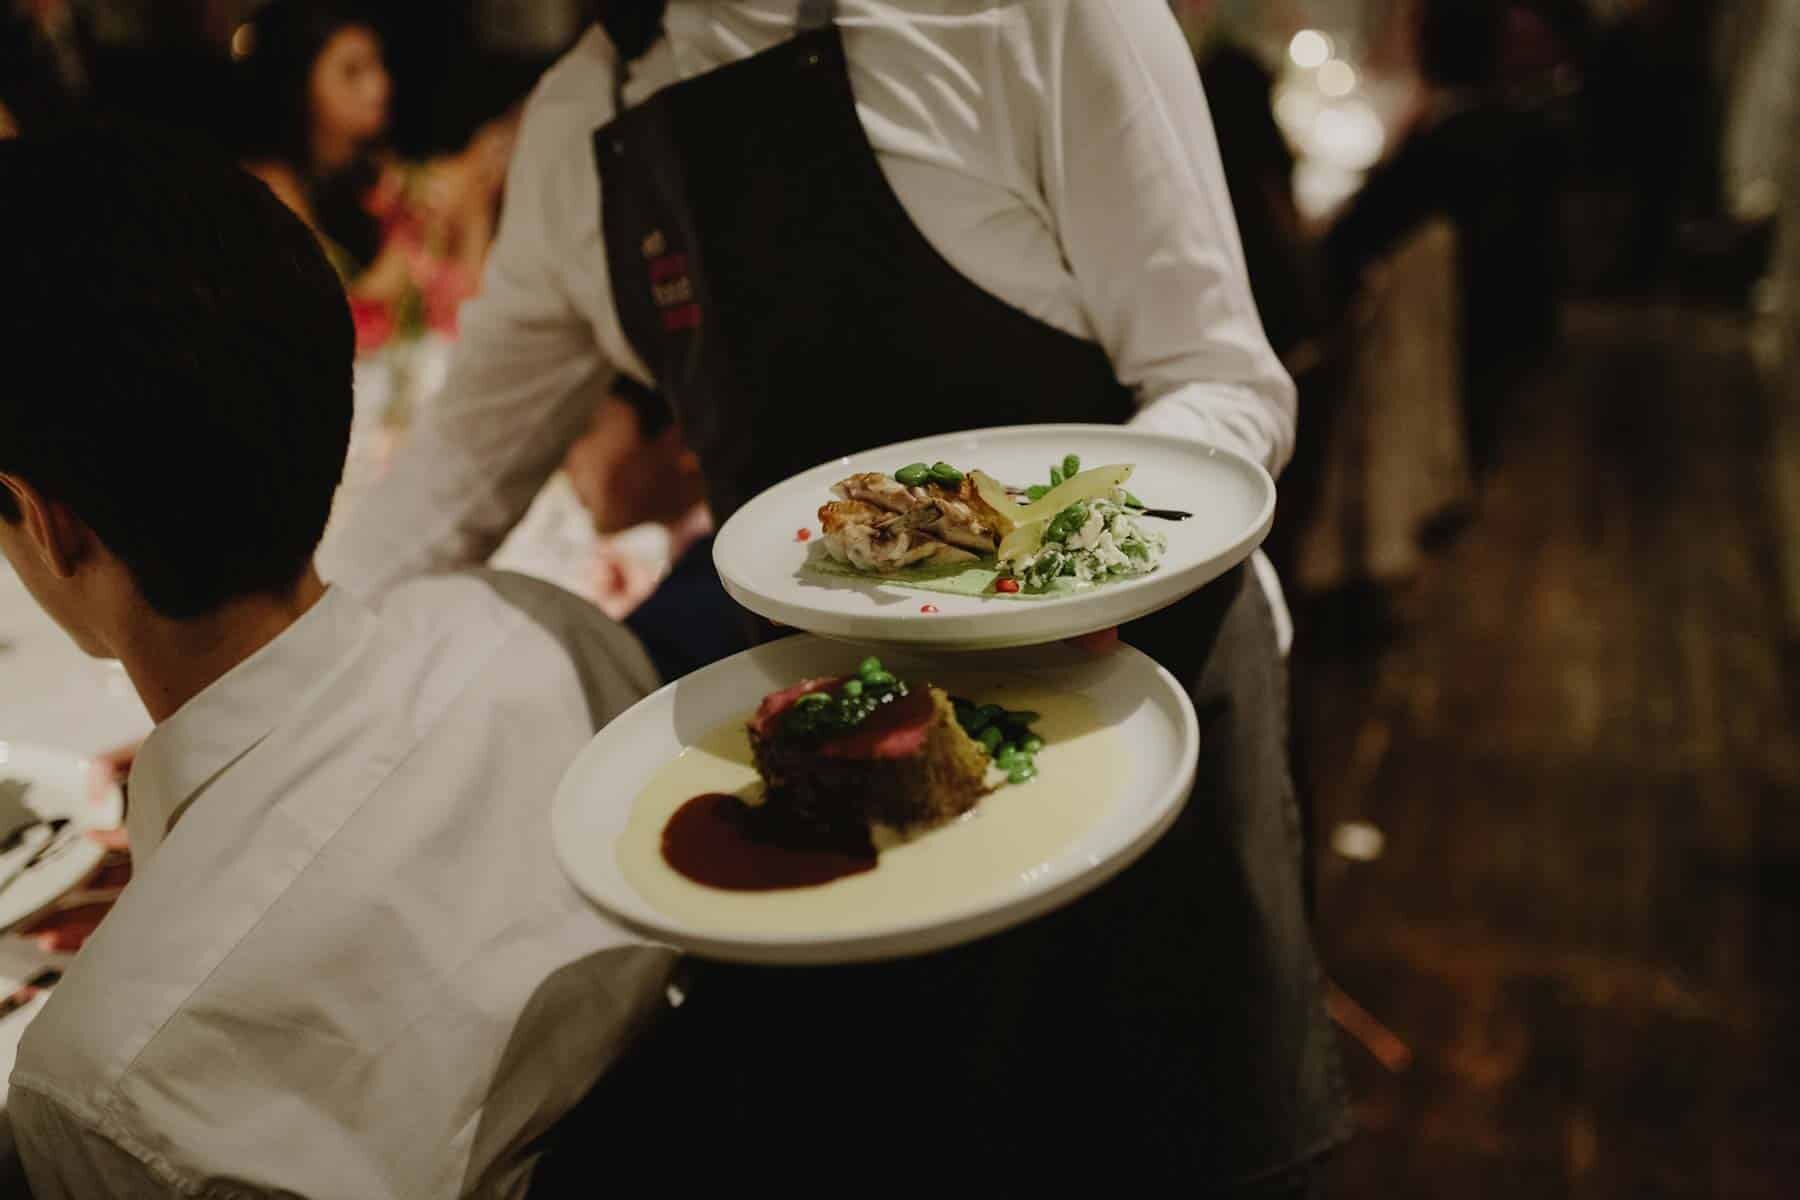 Melbourne wedding caterers Ed Dixon Food Design